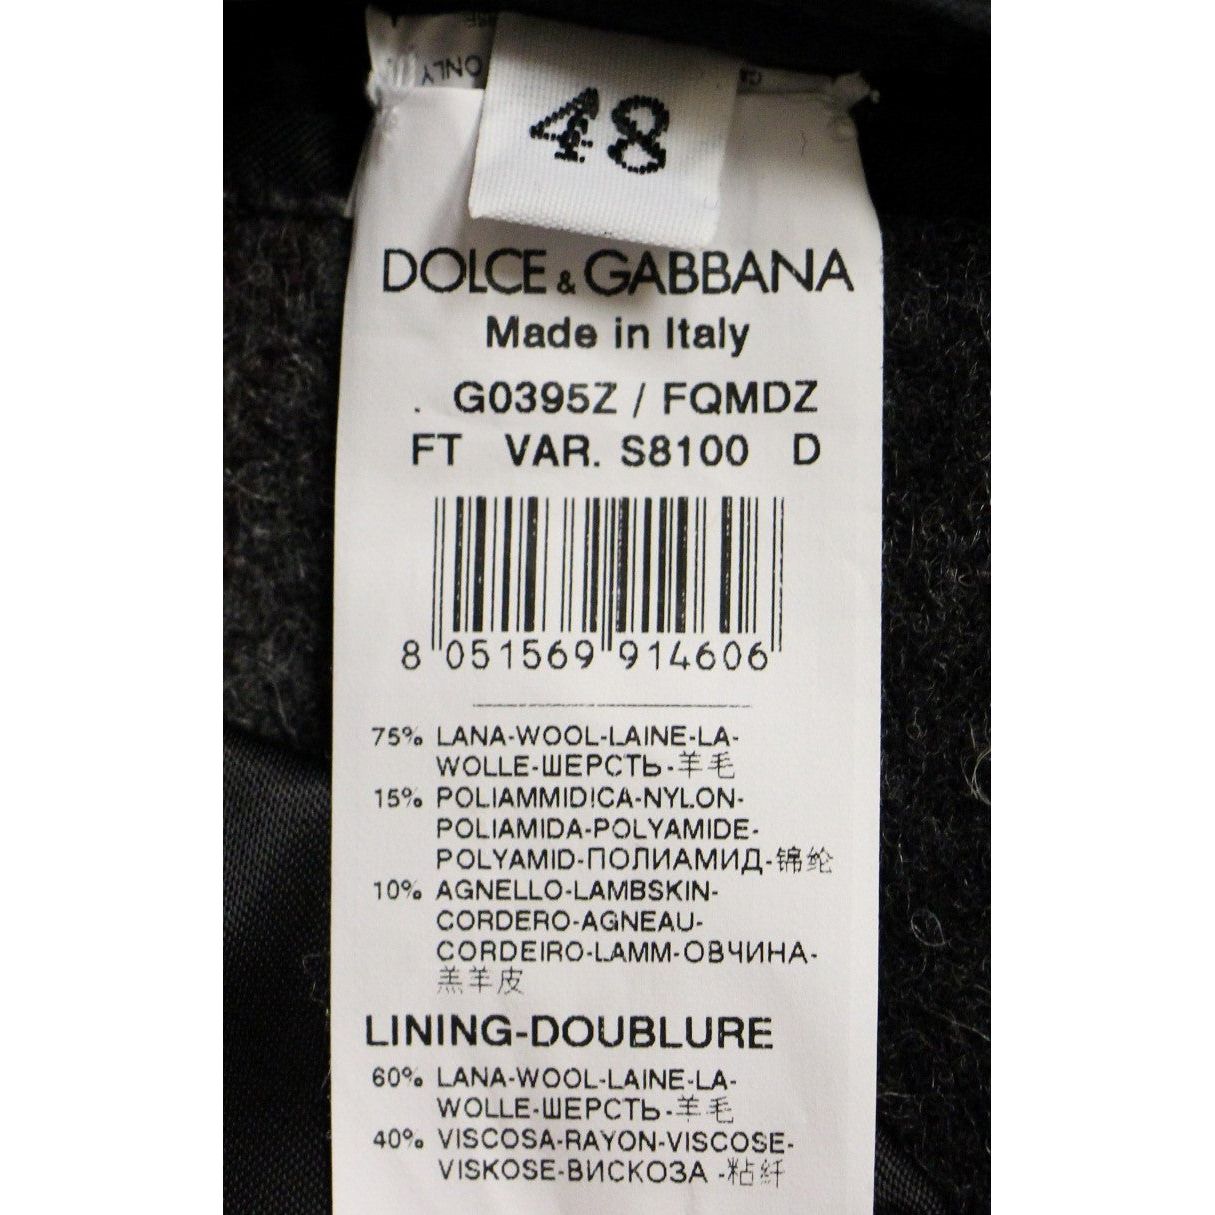 Dolce & Gabbana Sicilia Checkered Wool Blend Coat gray-double-breasted-coat-jacket Coats & Jackets 53557-gray-double-breasted-coat-jacket-8.jpg